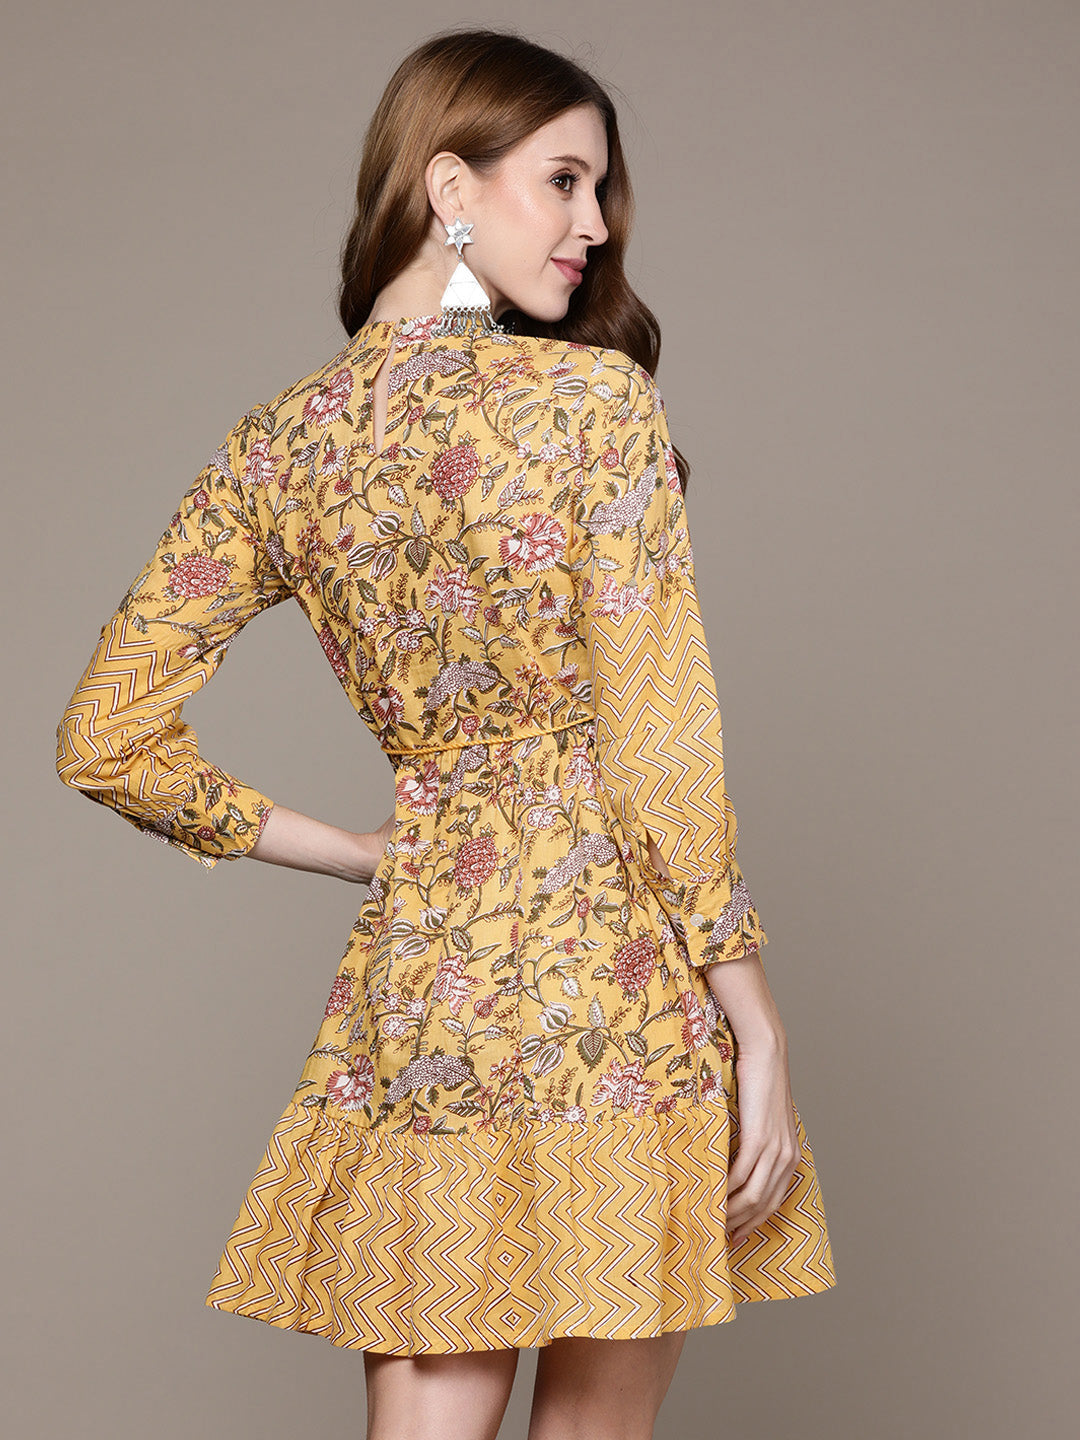 Ishin Women's Yellow Embellished Floral Dress